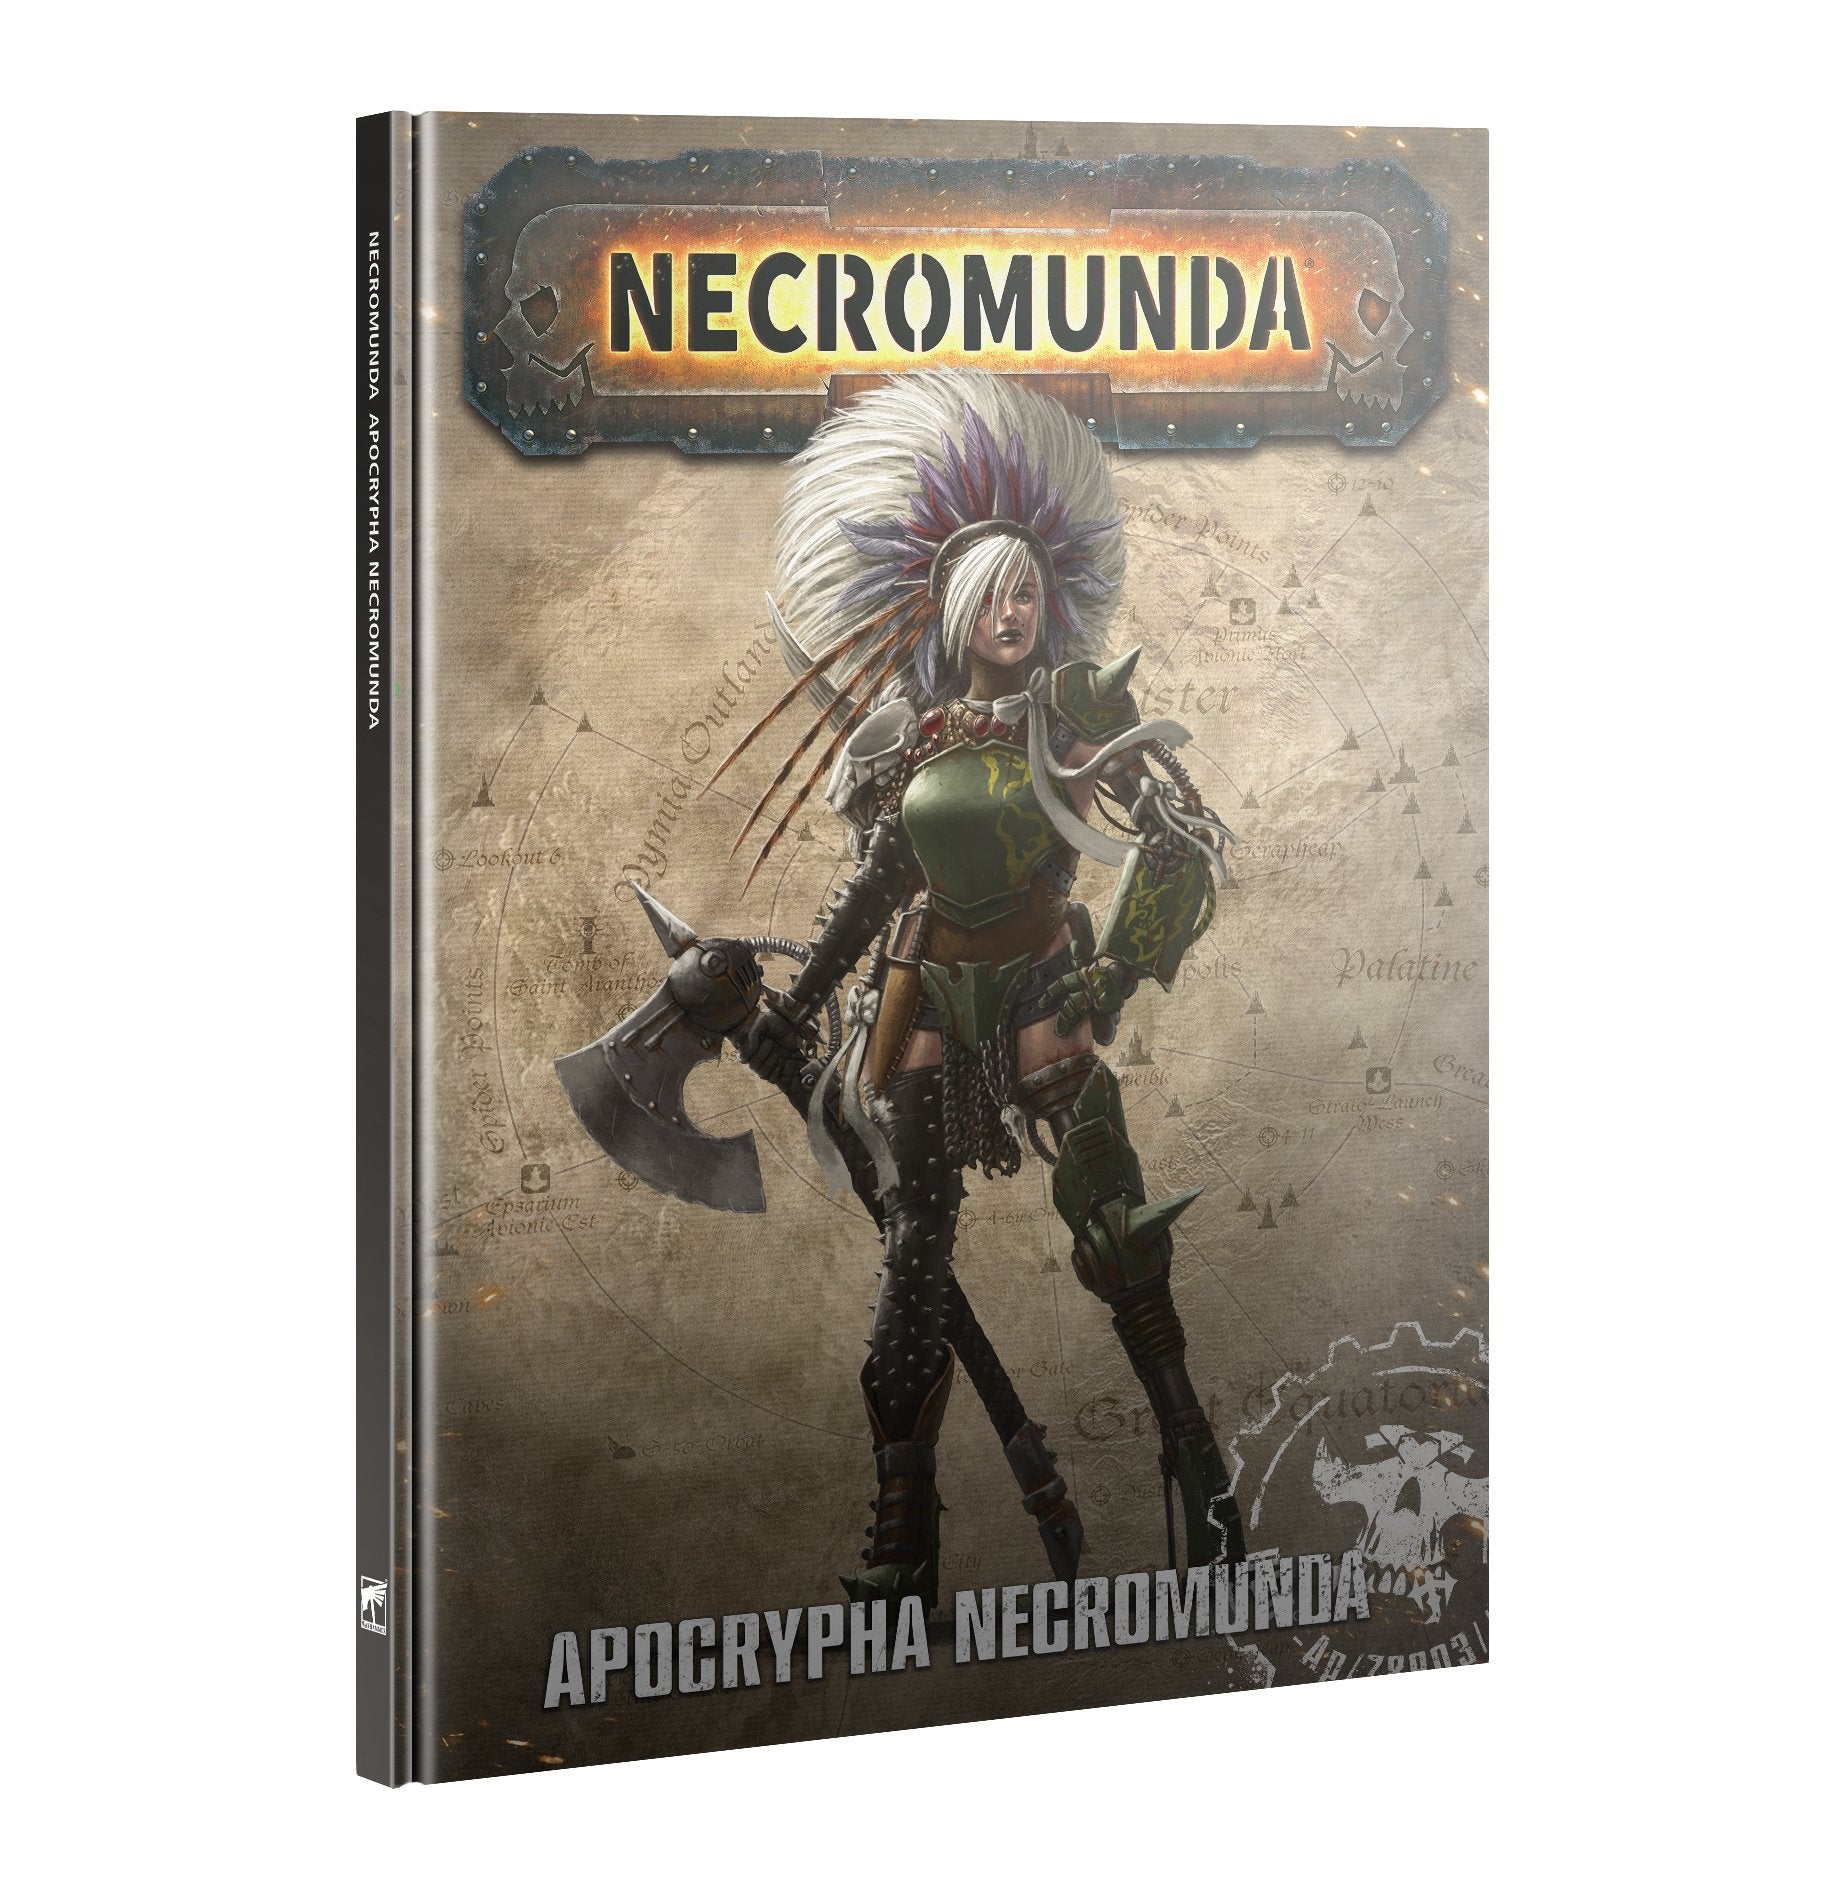 Necromunda: Apocrypha Necromunda - Release Date 6/1/24 - Loaded Dice Barry Vale of Glamorgan CF64 3HD